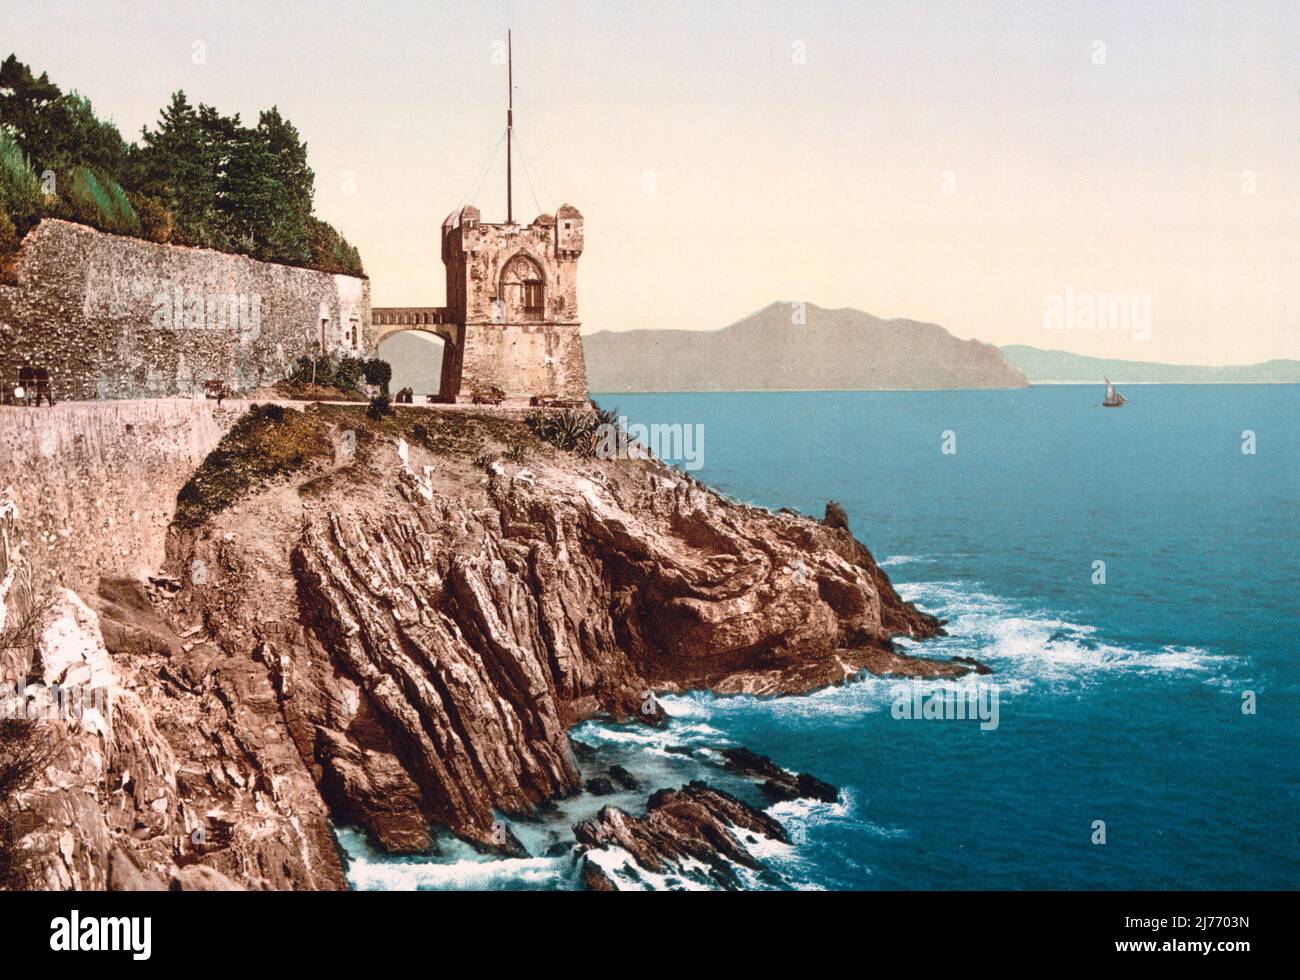 La torre, Nervi, Genova, Italia, circa 1900 Foto Stock